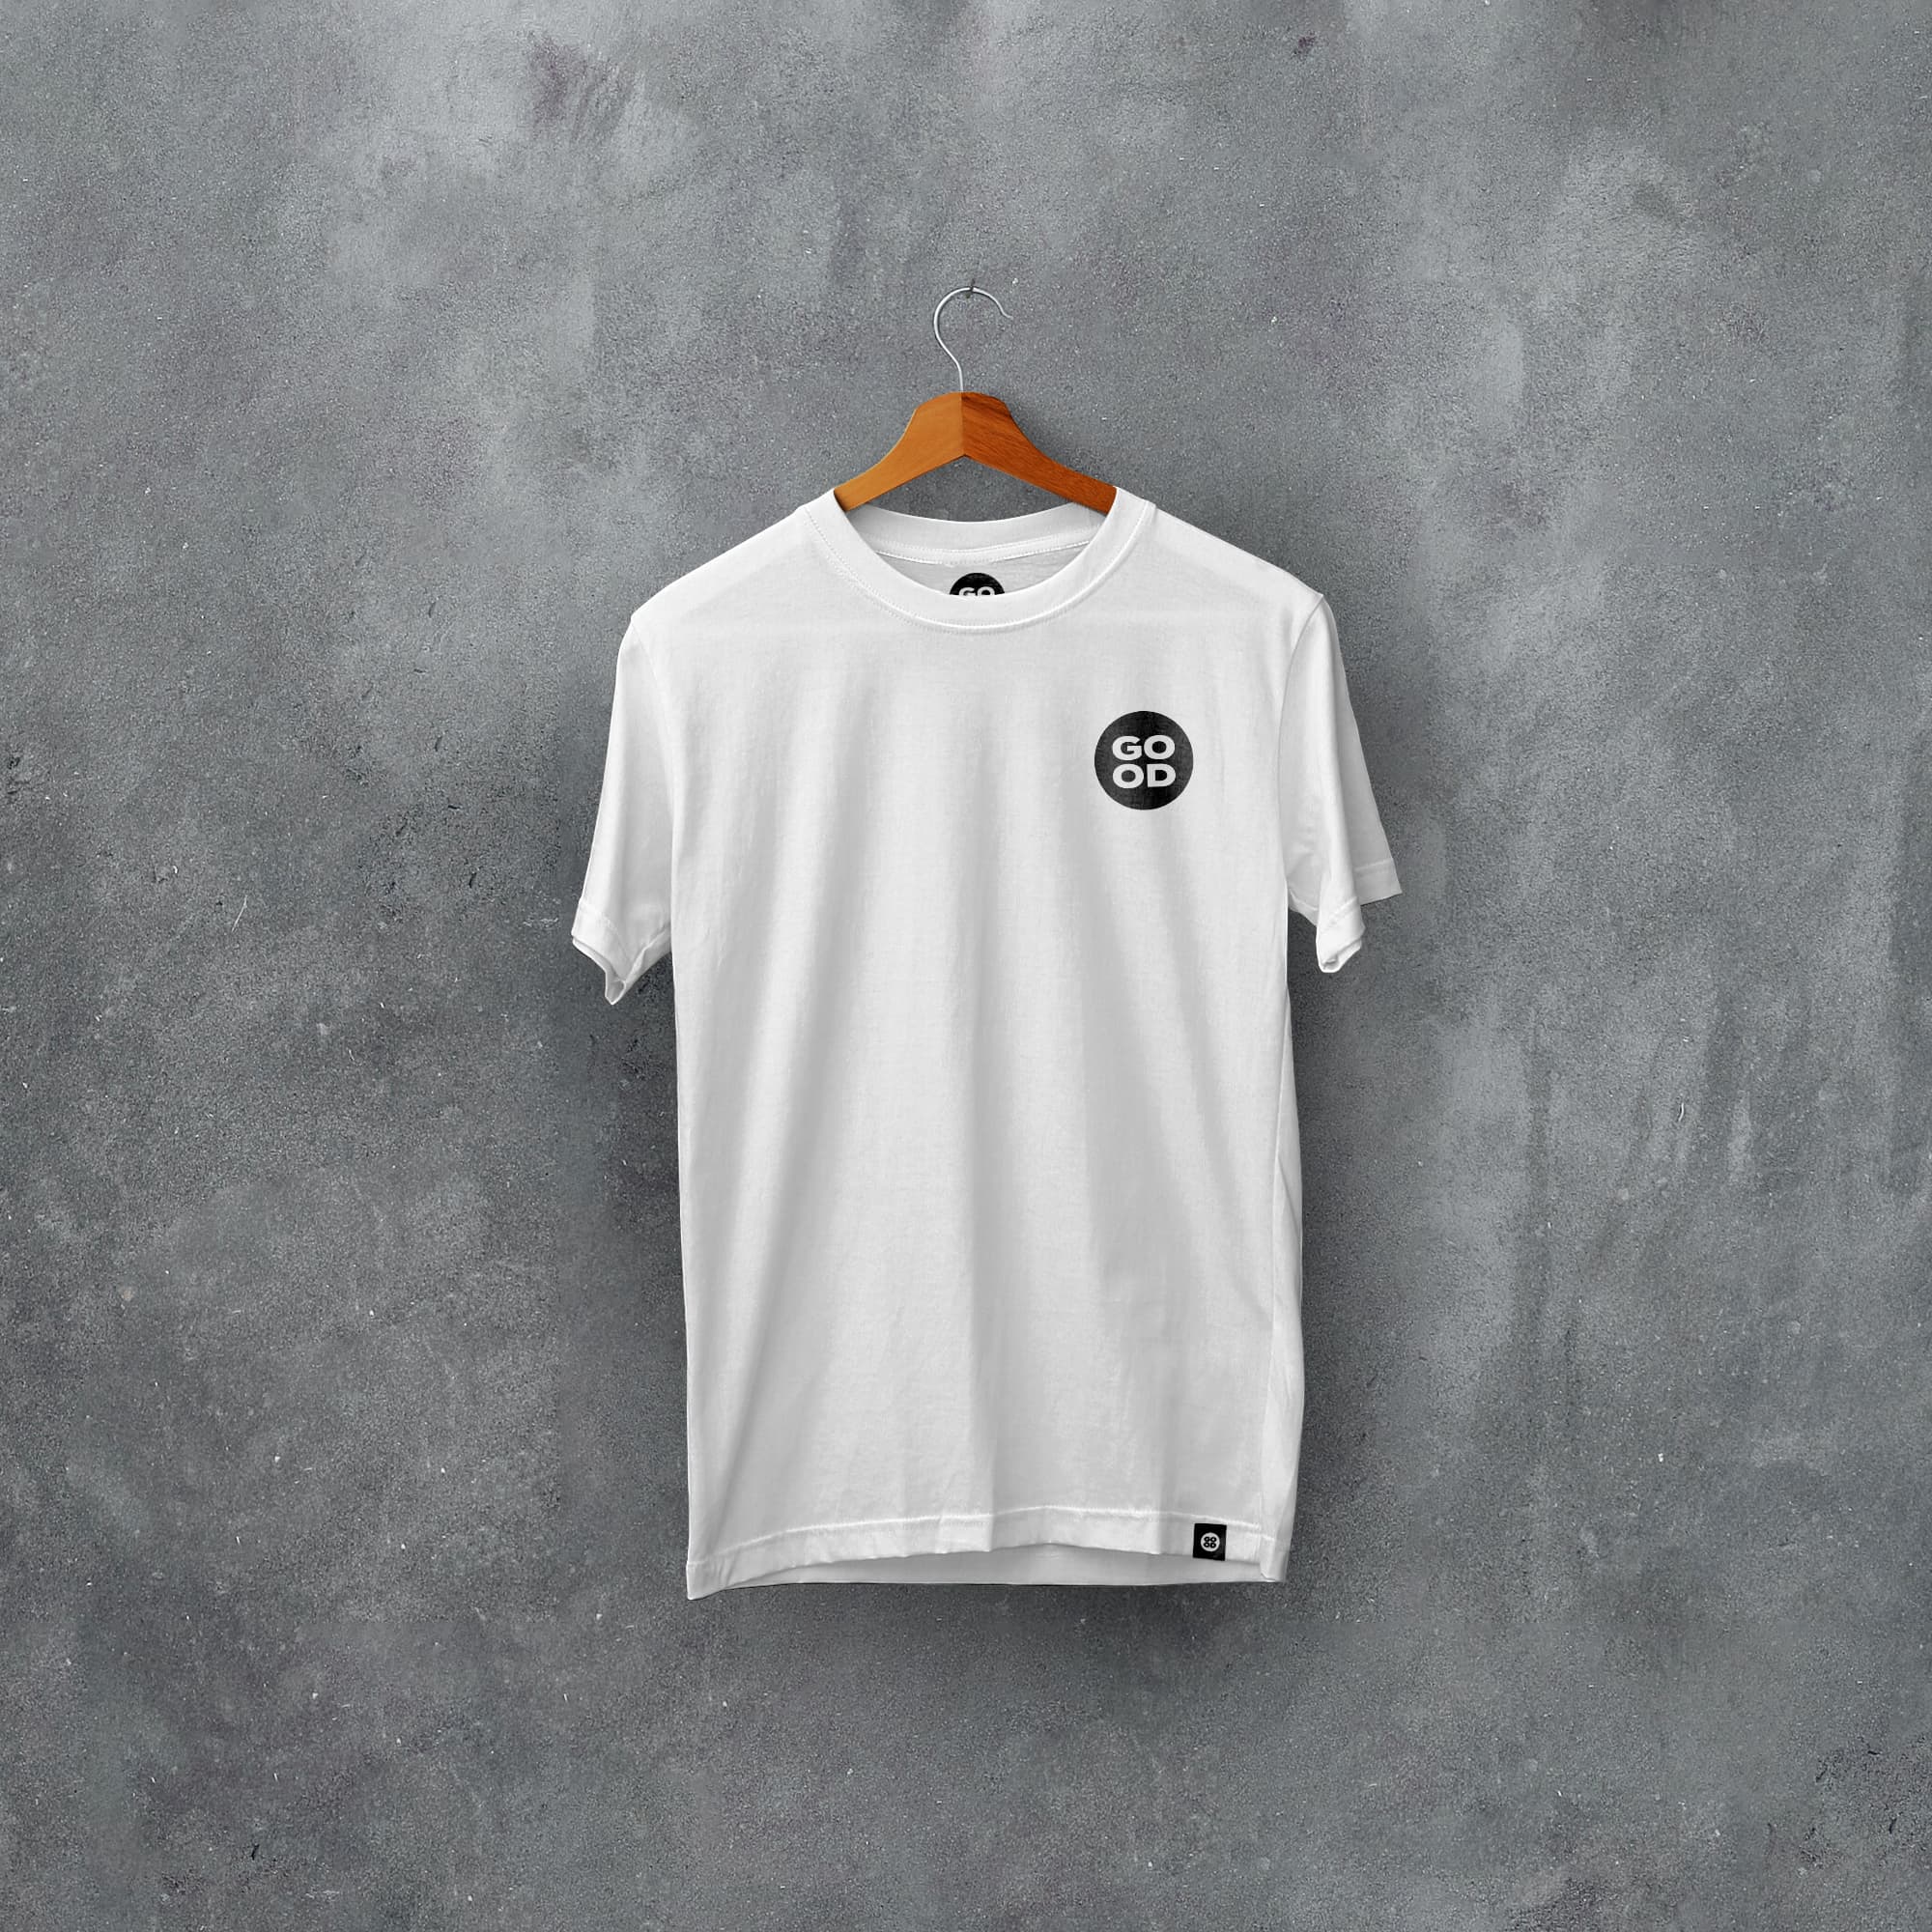 England Classic Kits Football T-Shirt